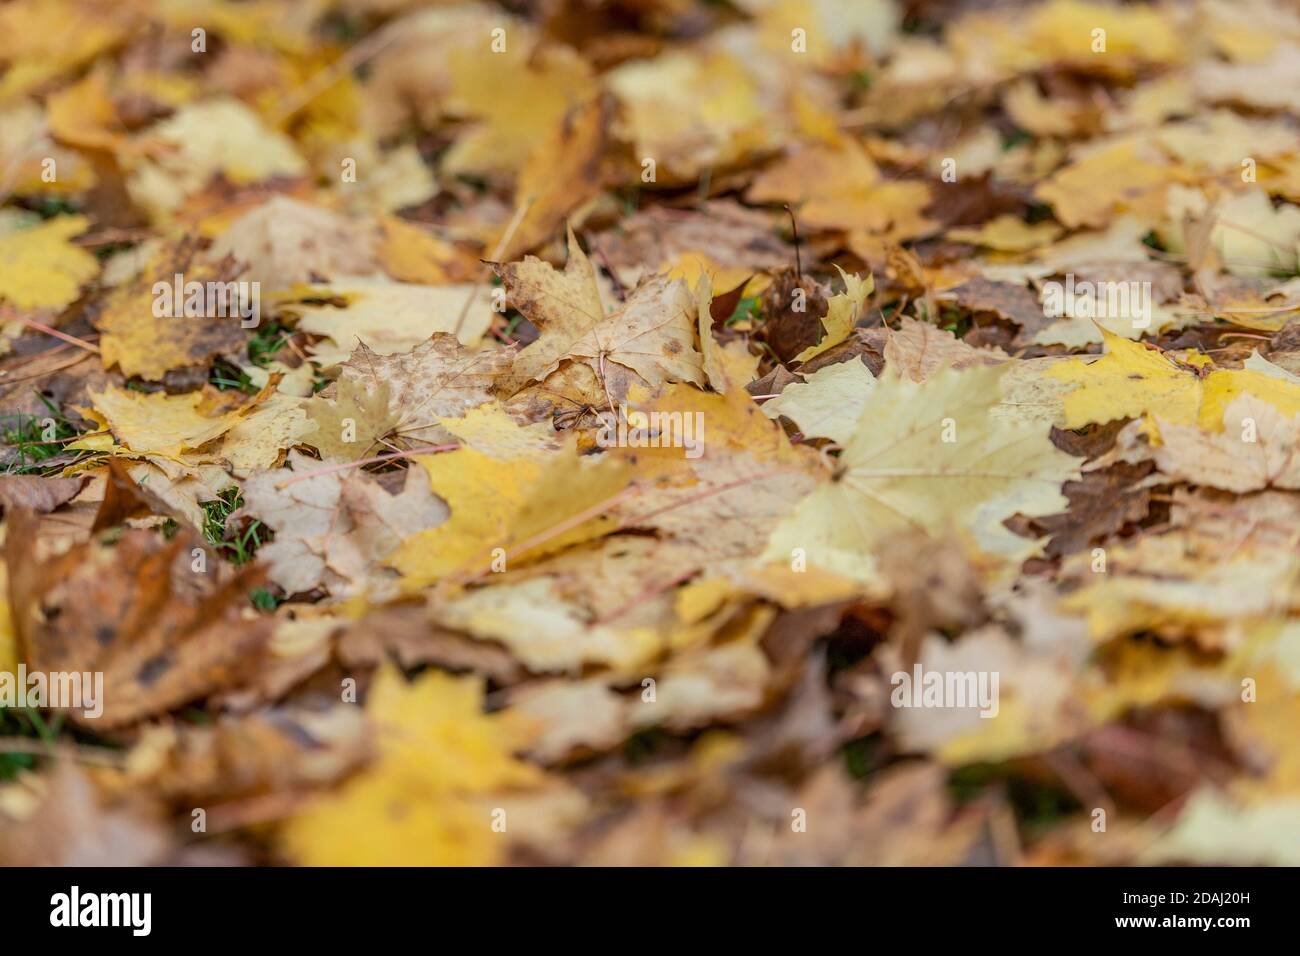 fallen autumn leaves on the ground Stock Photo